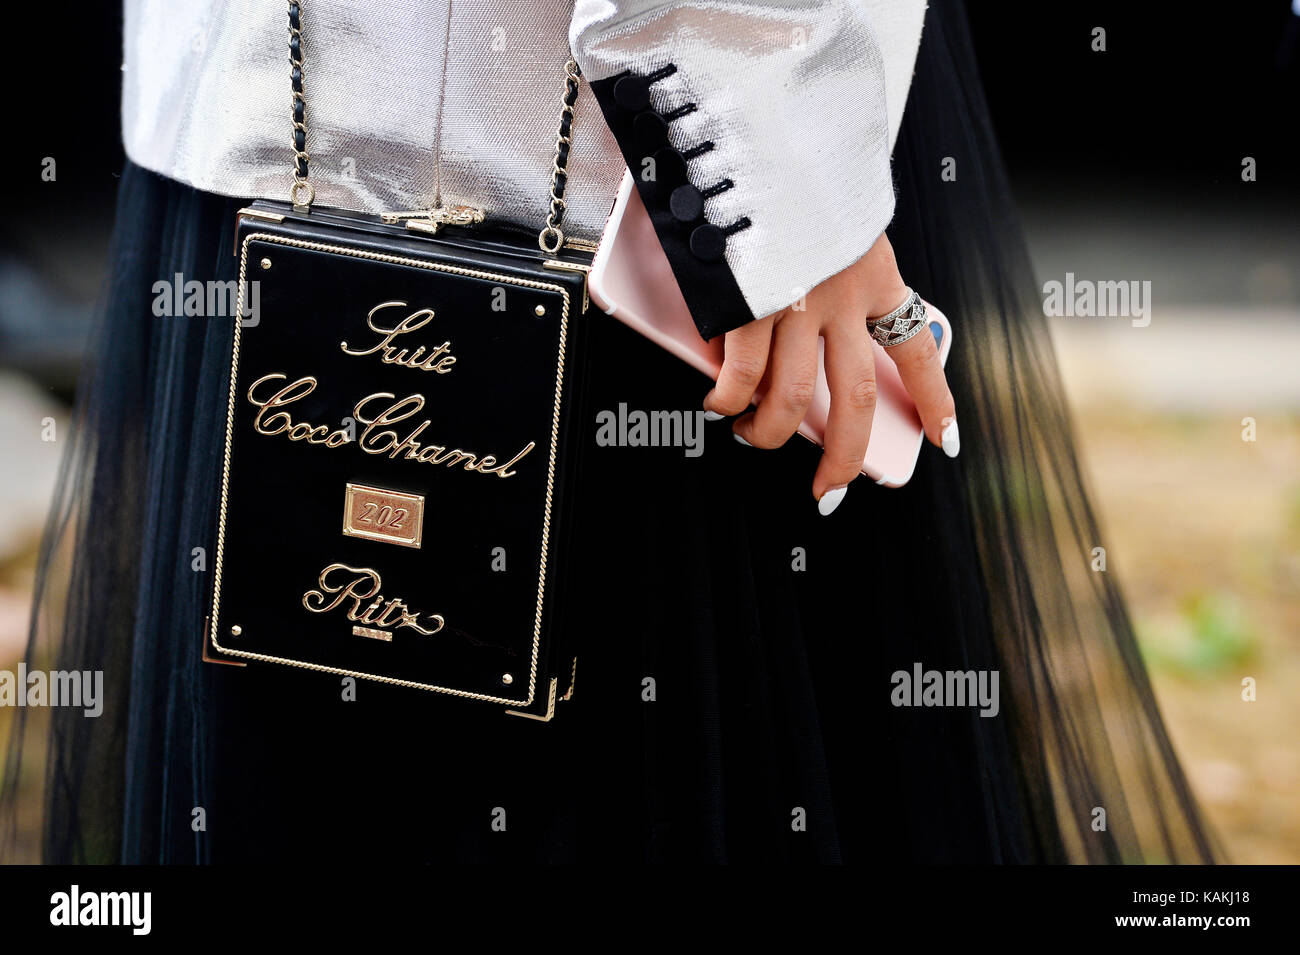 Dior mode paris hi-res stock photography and images - Alamy